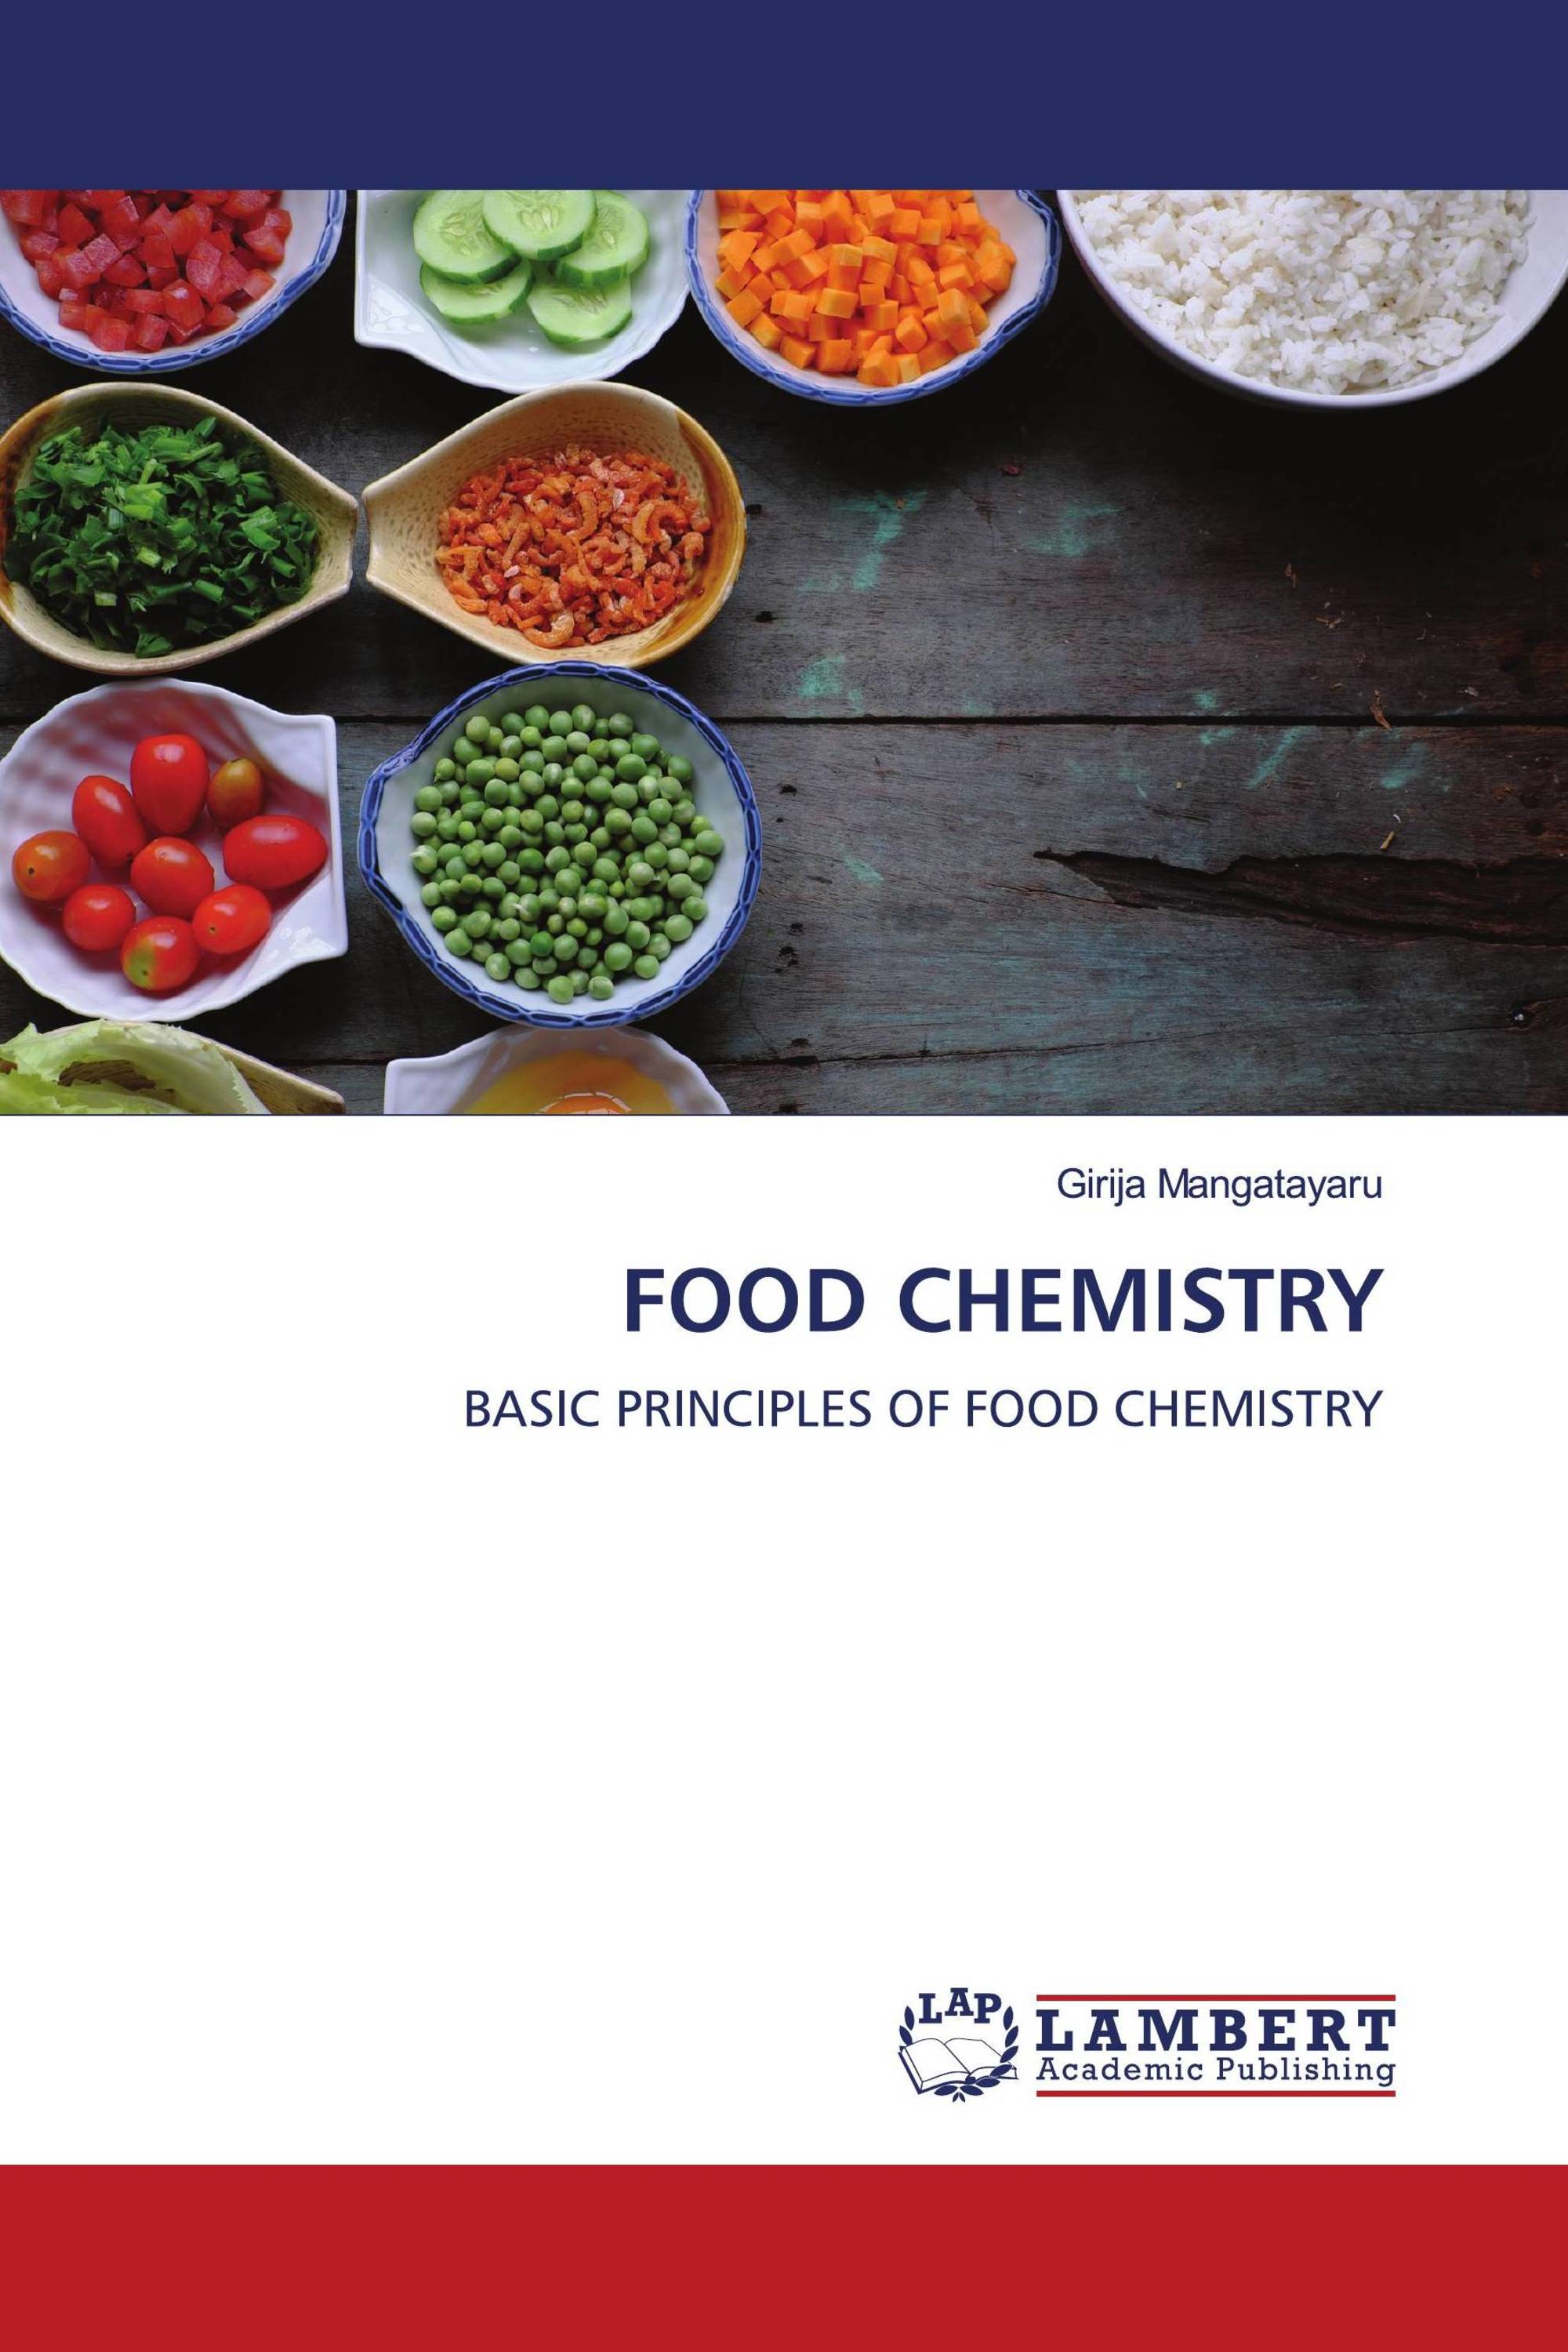 food chemistry thesis ideas